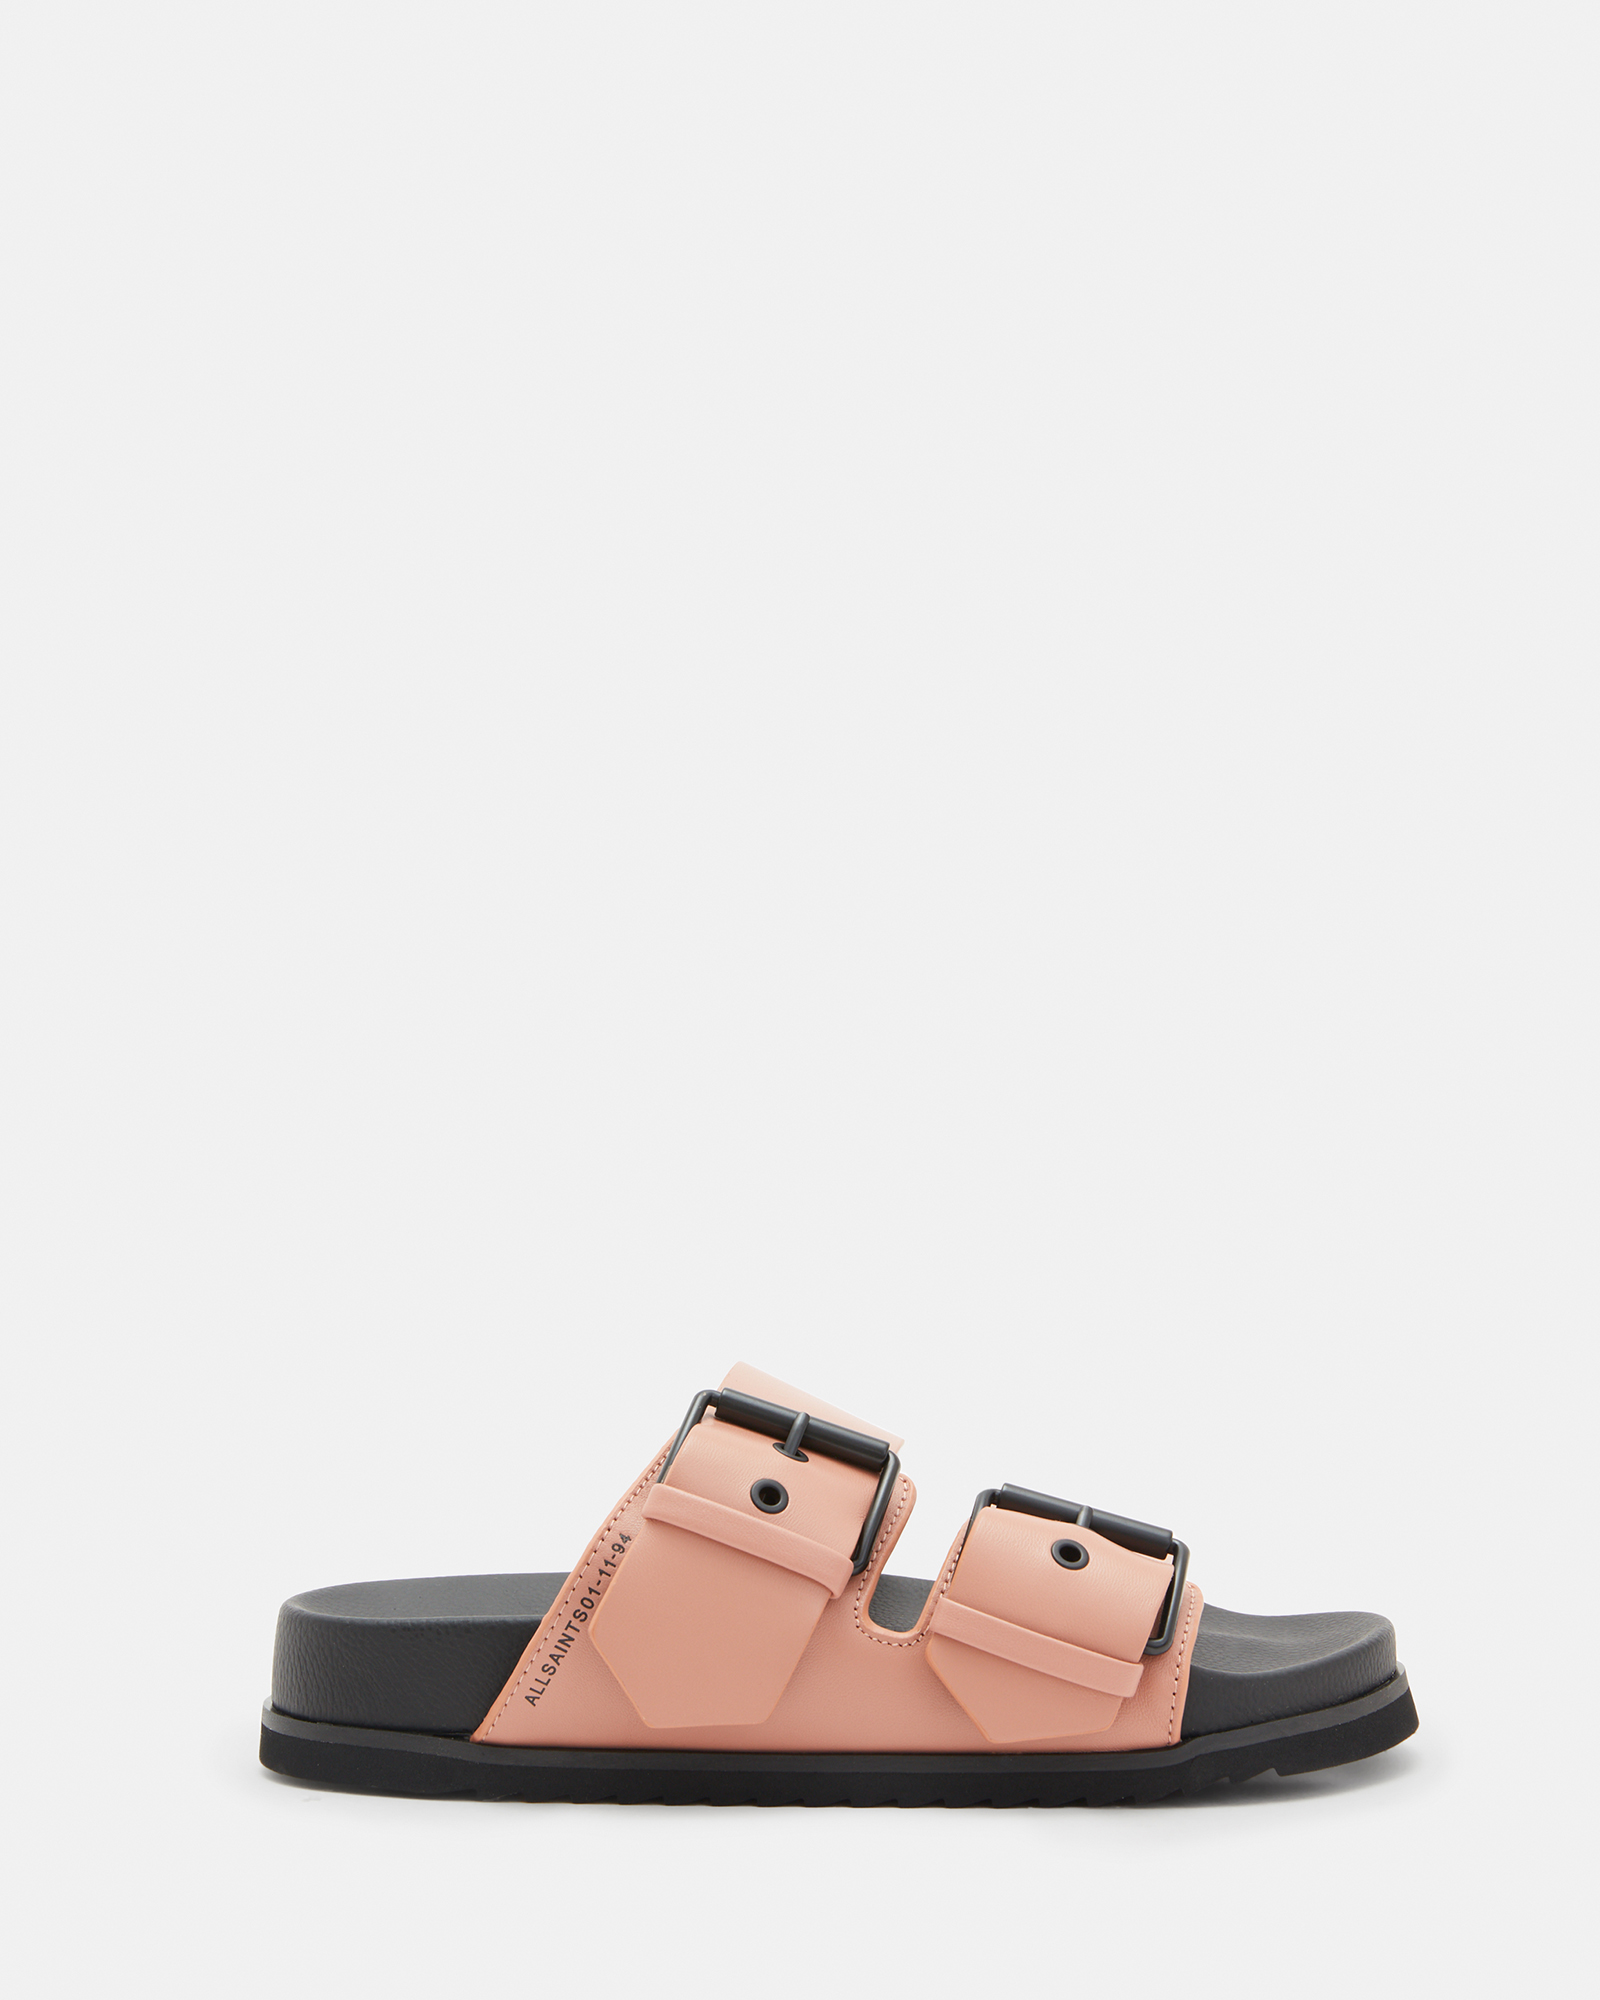 AllSaints Sian Leather Buckle Sandals,, Pink